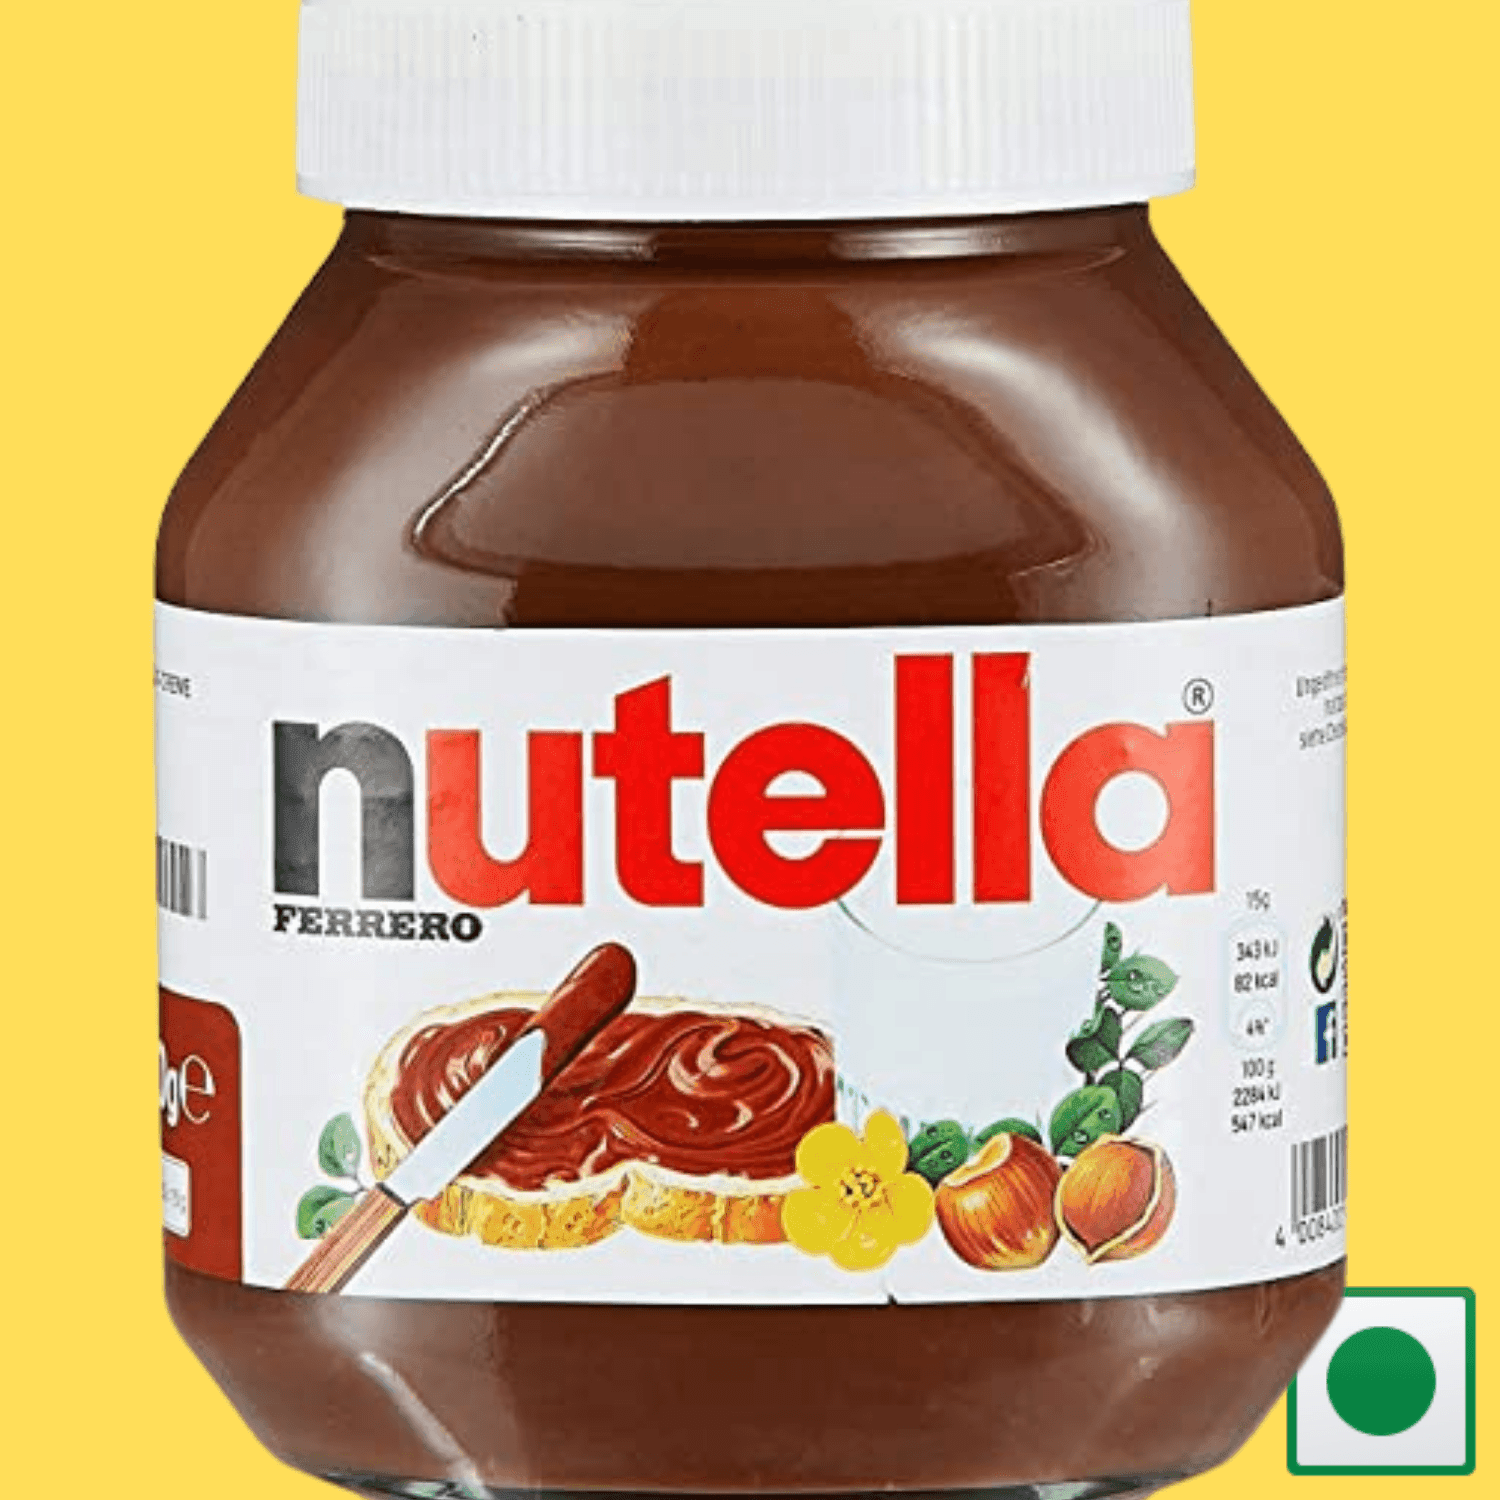 Nutella Chocolate Hazelnut Spread, 350g (Imported) - Super 7 Mart